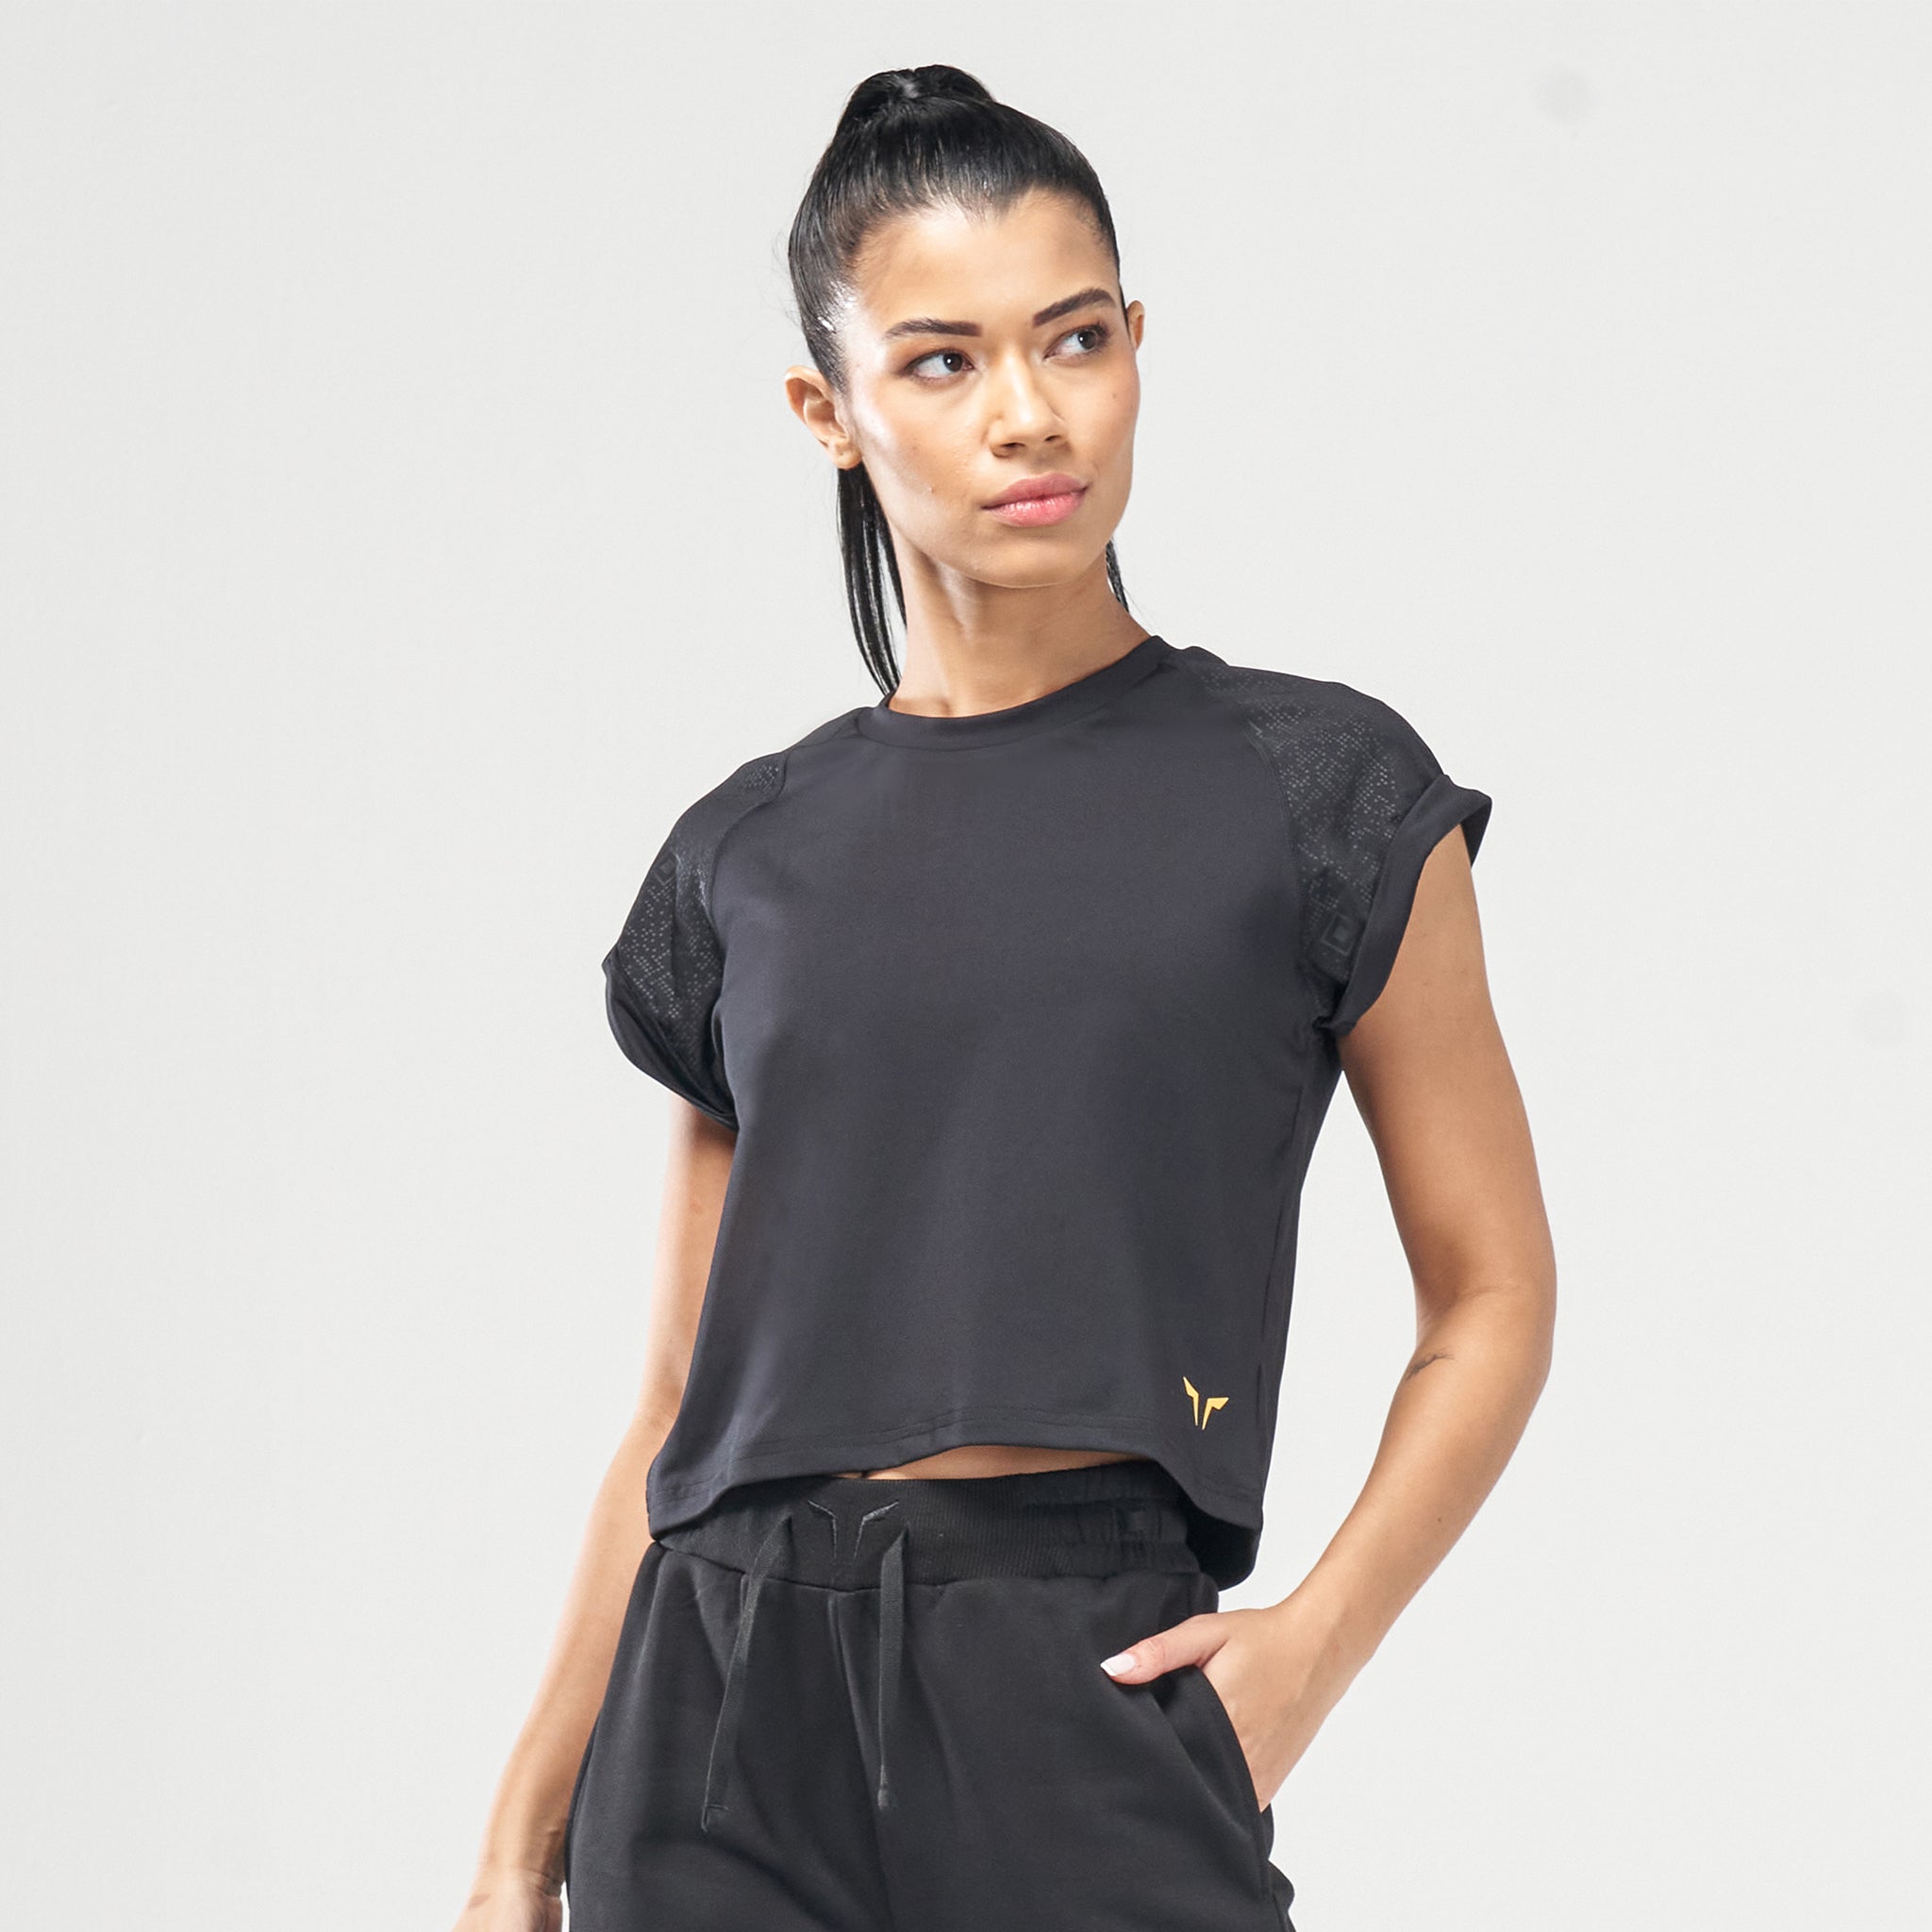 AE, Code Power Crop Top - Black, Workout Shirts Women